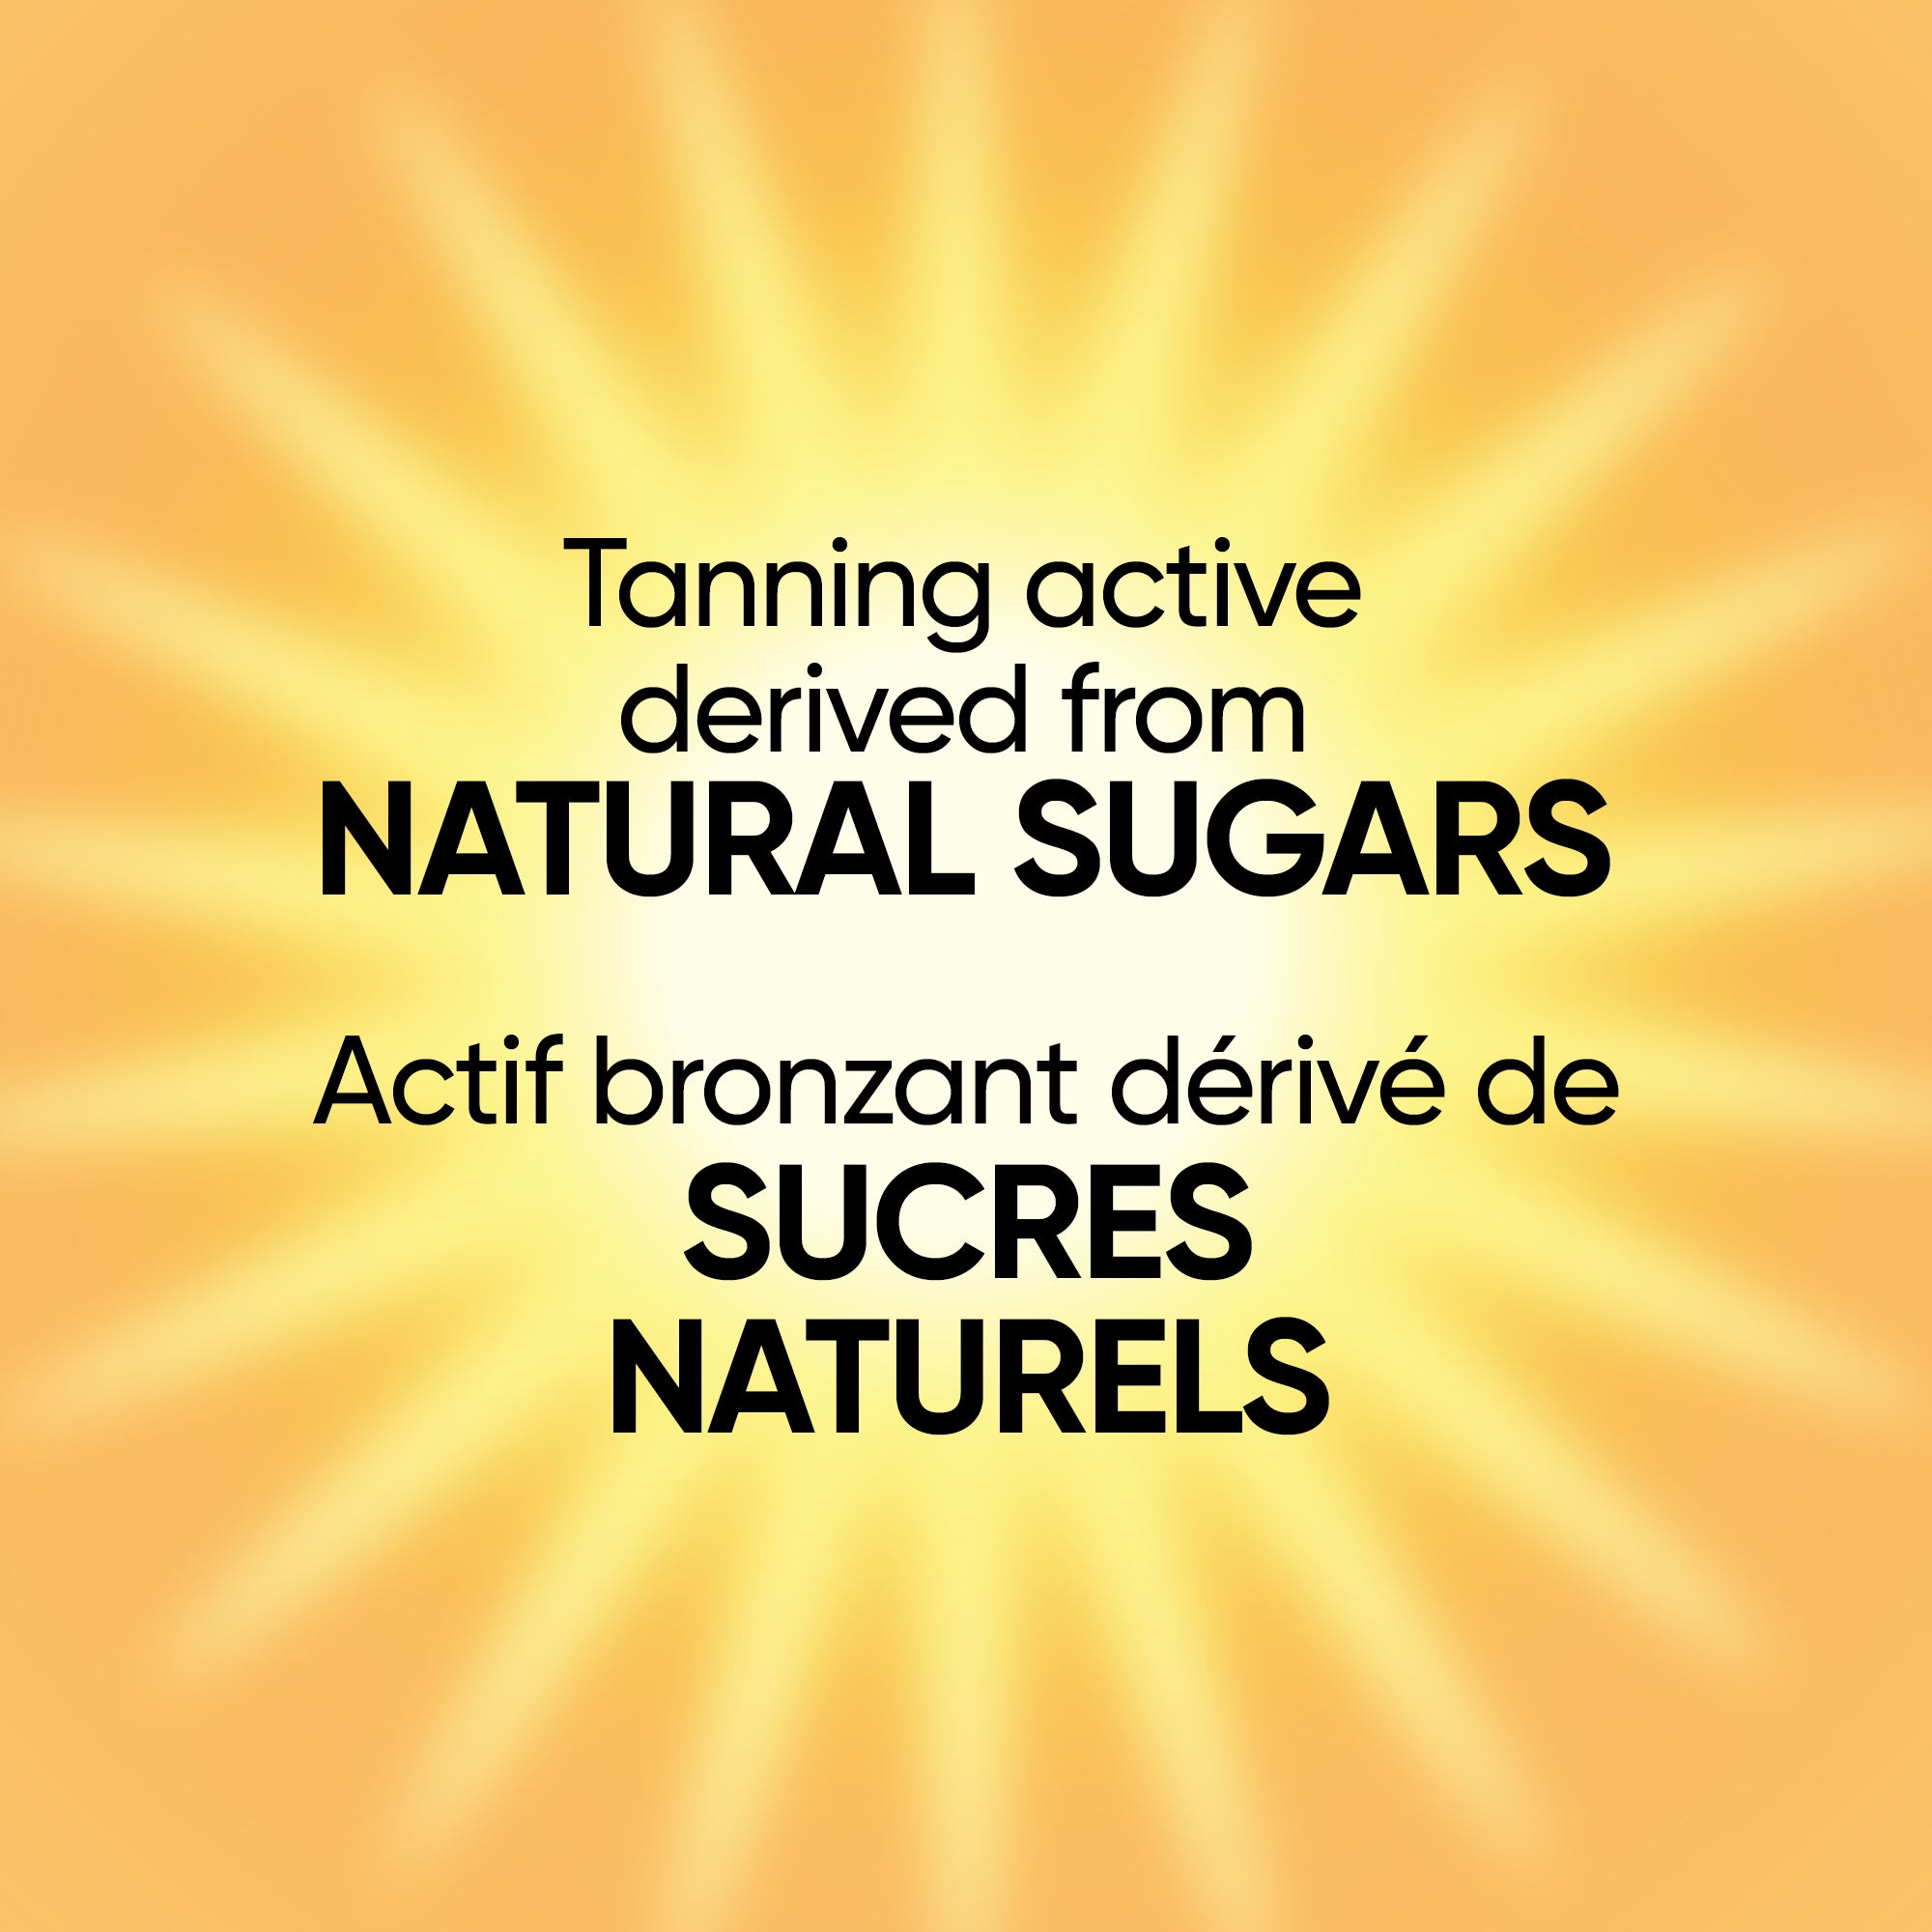 English: Tanning active derived from natural sugars Français: Actif bronzant issu de sucres naturels